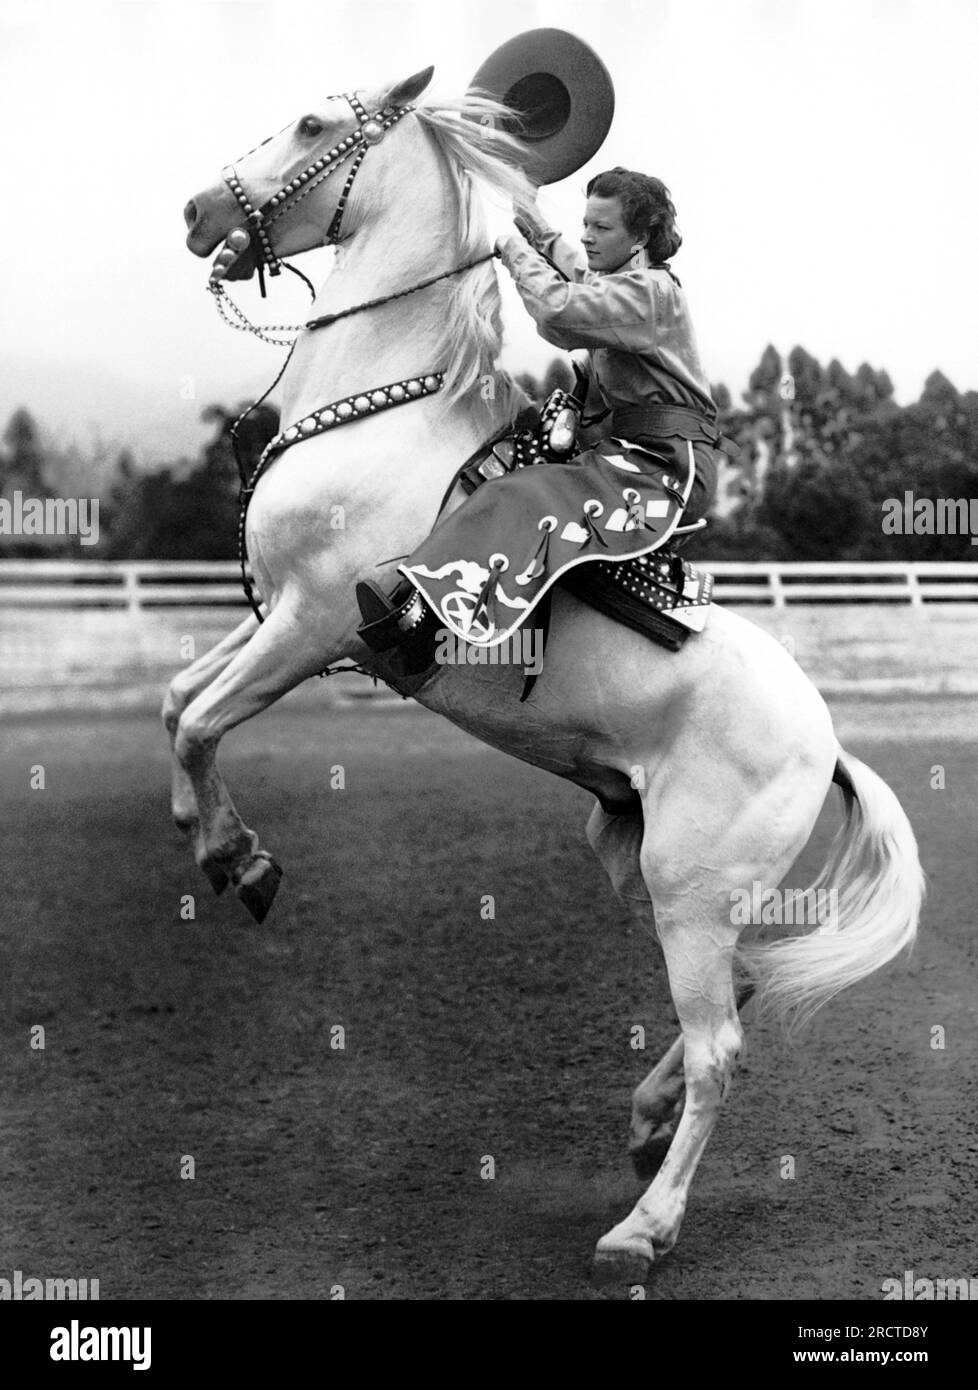 Santa Barbara, California:  1934. A 21 year old cowgirl from Santa Barbara who will participate in the annual California Rodeo at Salinas this year. Stock Photo